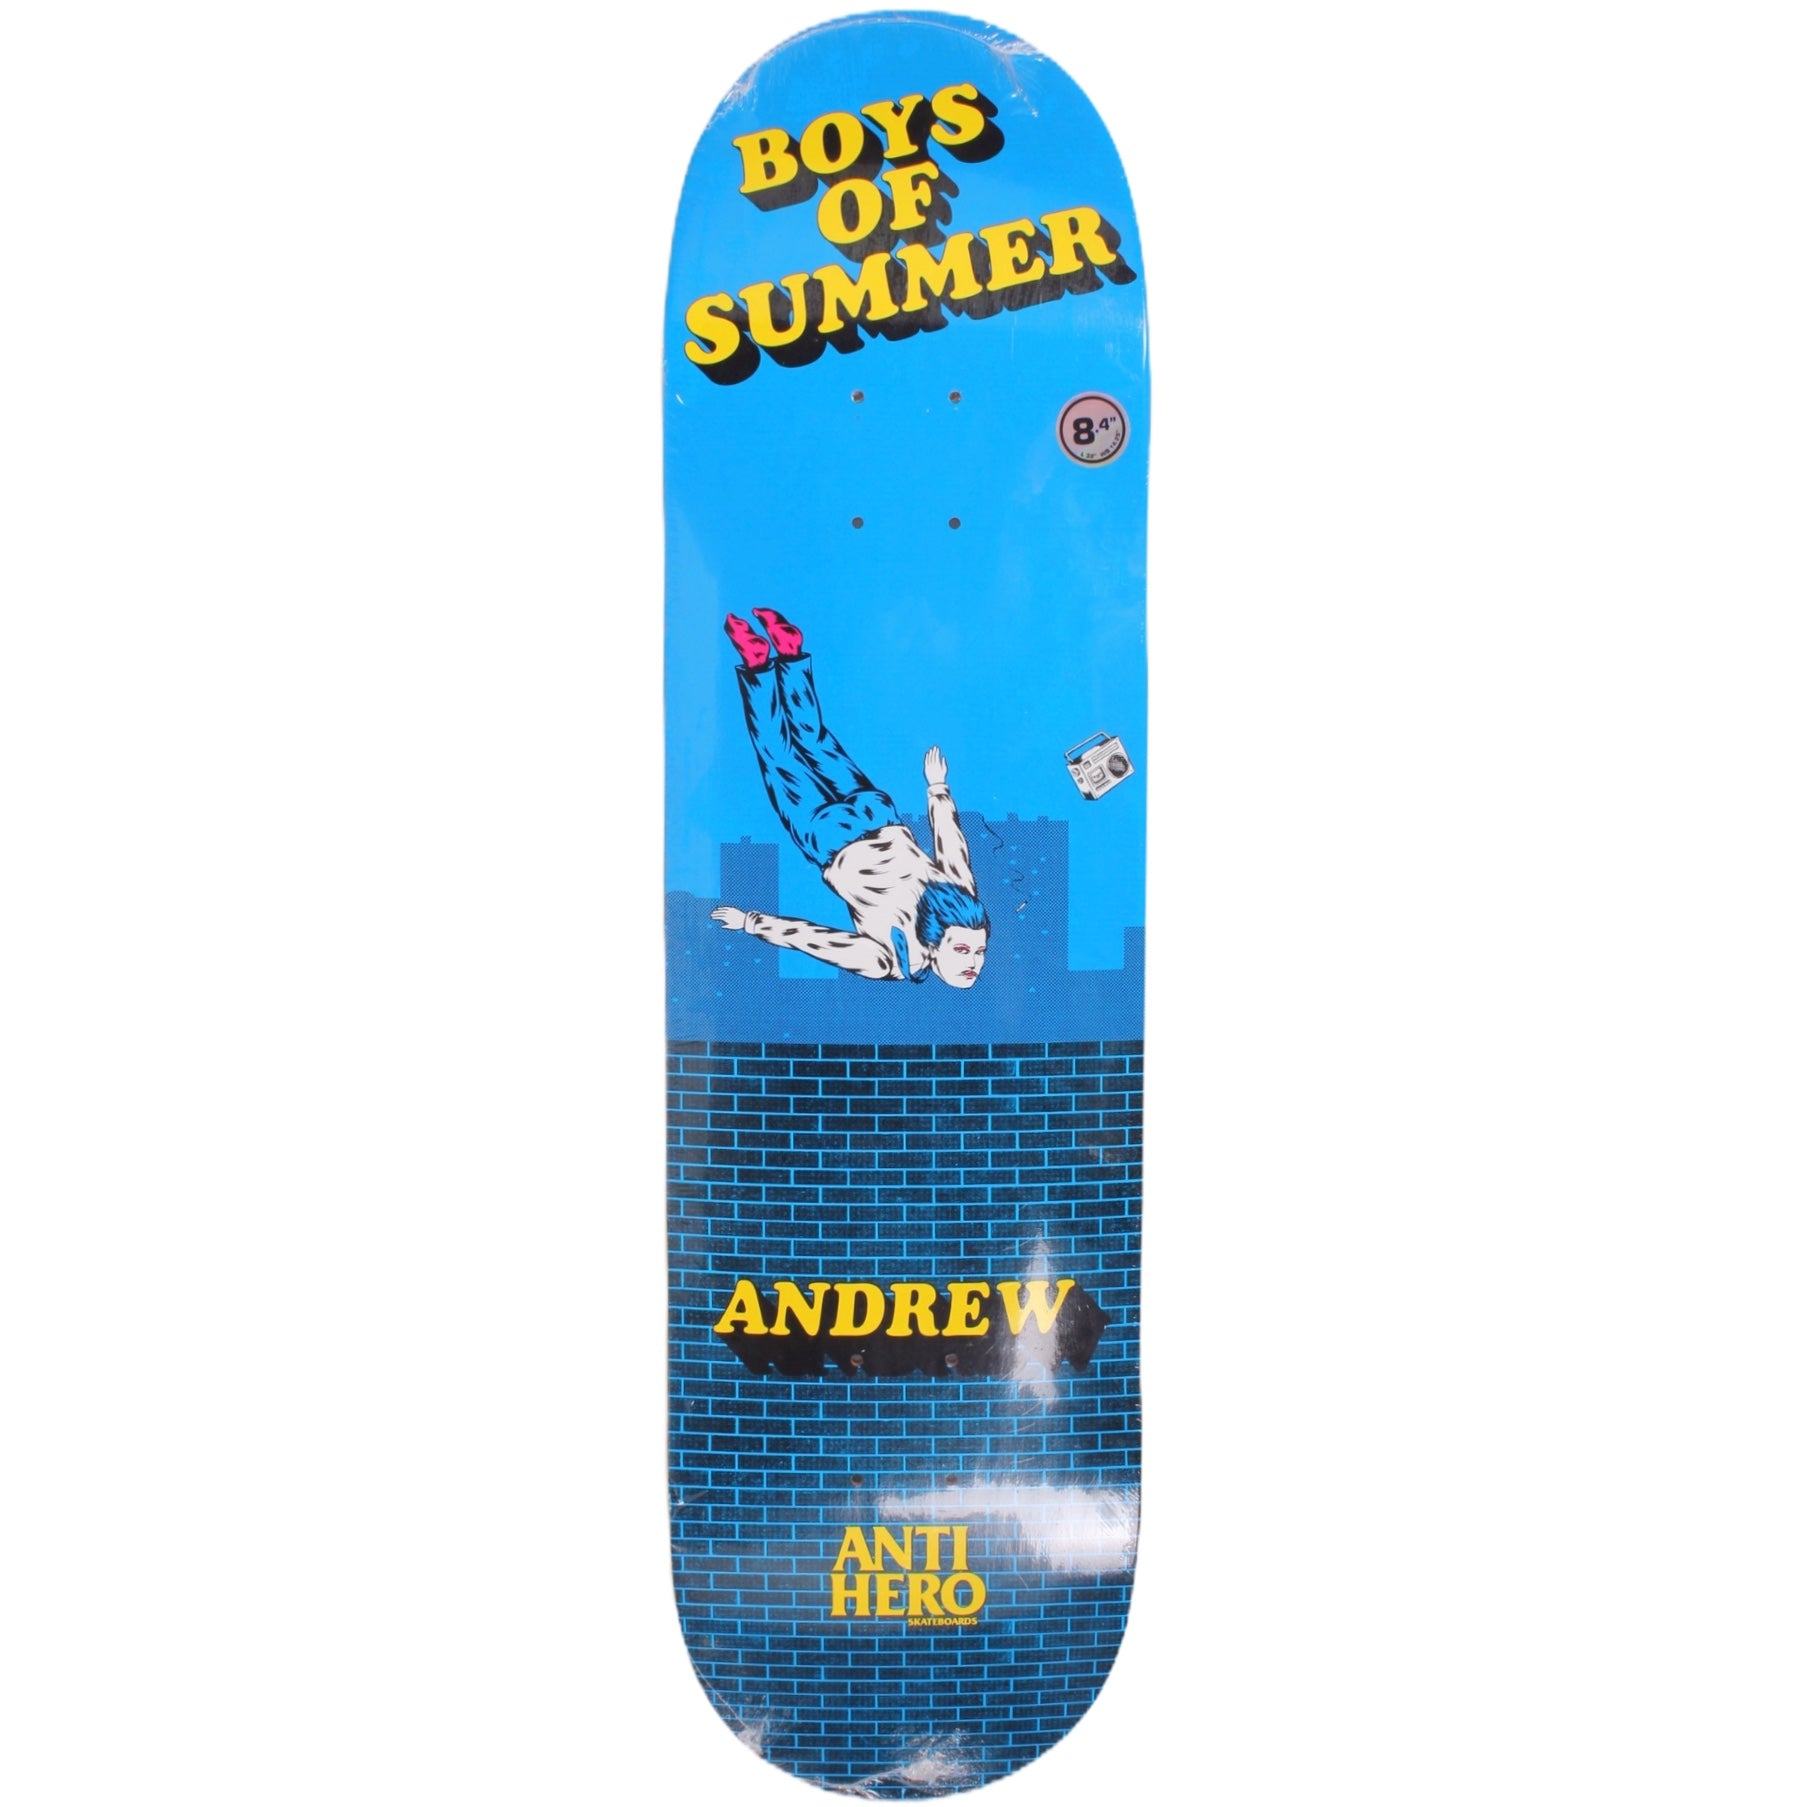 Overripe Anti Hero Andrew Allen Boys of Summer Deck + Sealed BOS2 DVD 8.4"